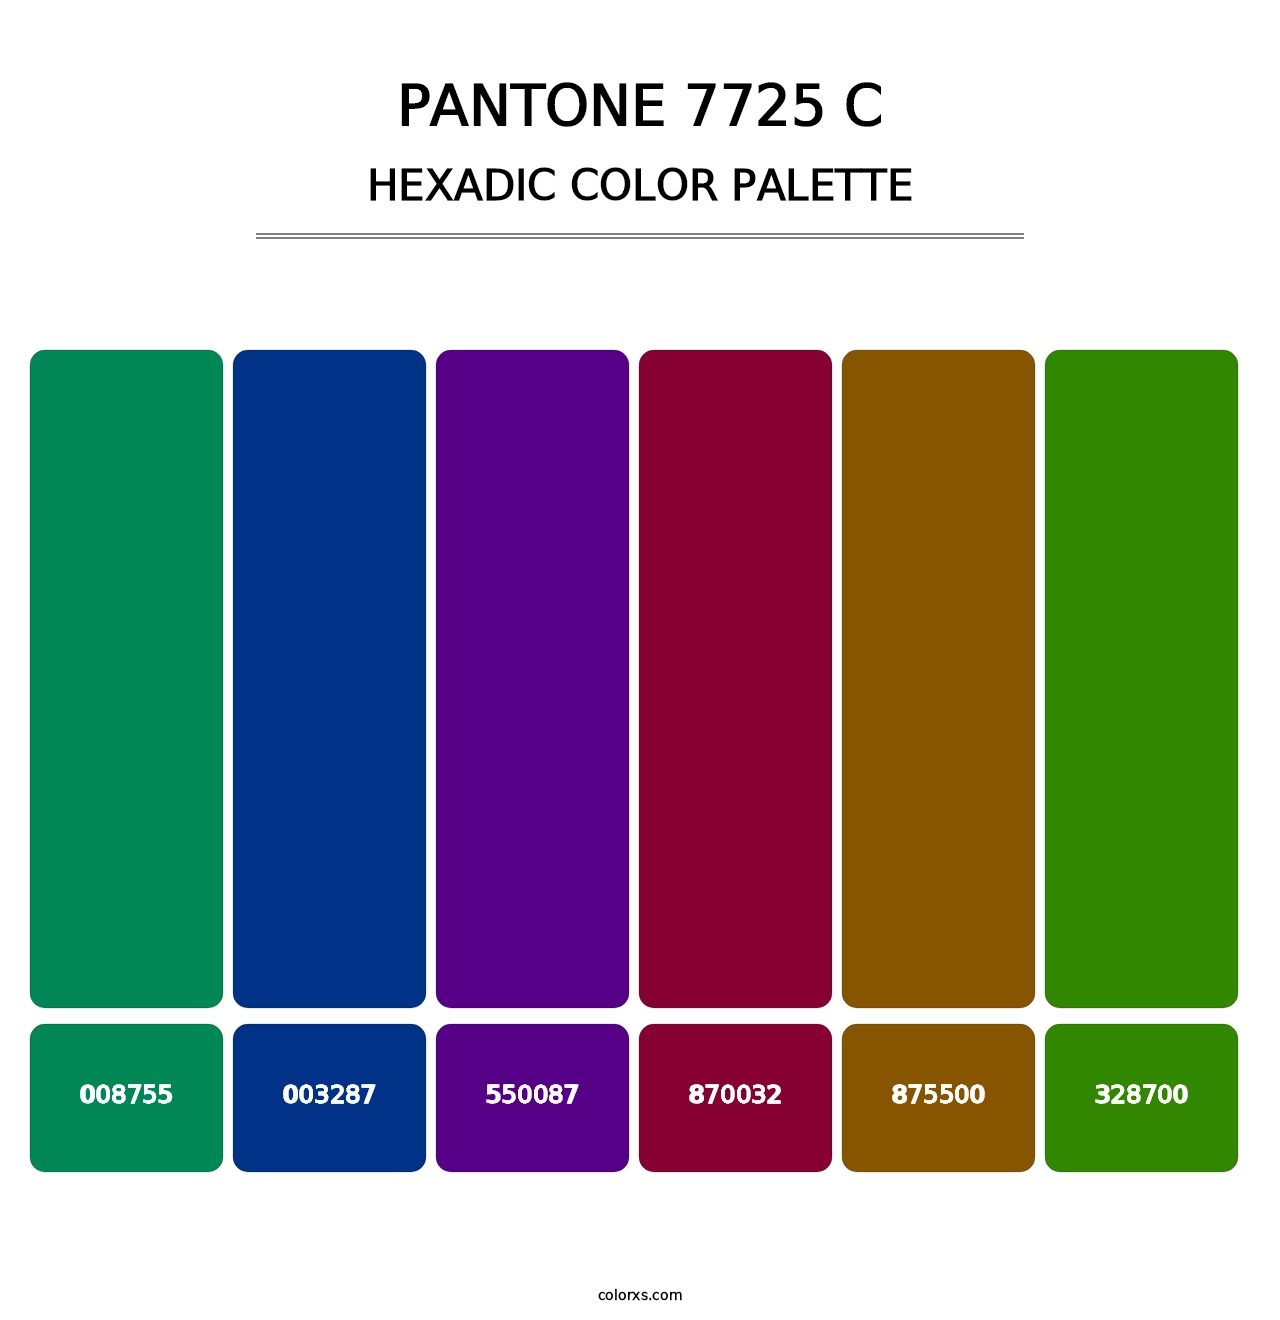 PANTONE 7725 C - Hexadic Color Palette